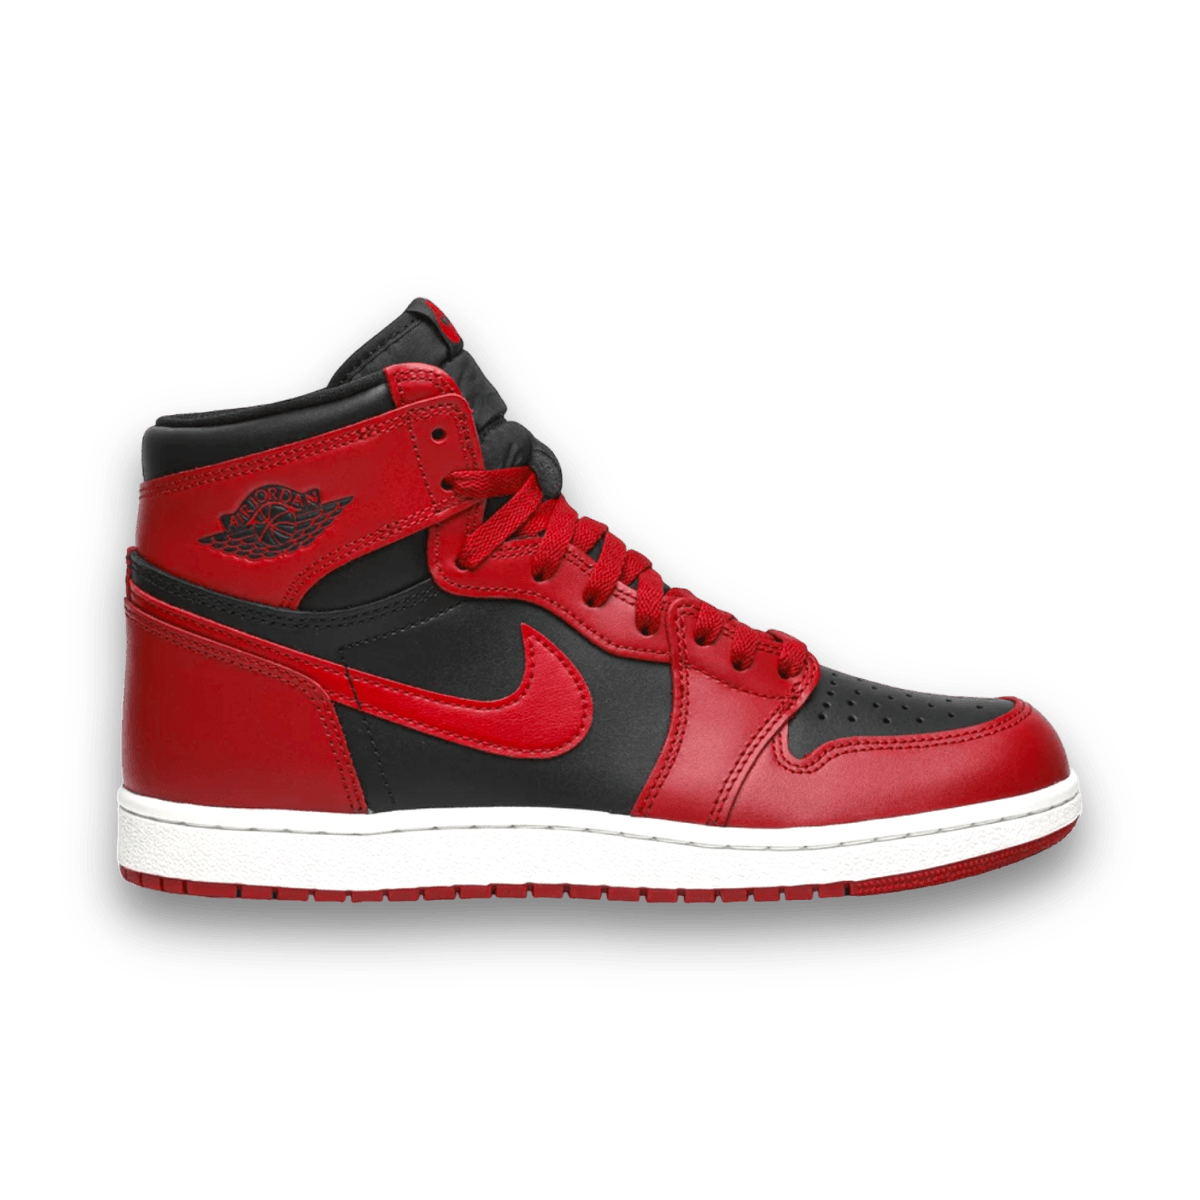 Air Jordan 1 Retro High '85 'Varsity Red' - sneaker - High Sneaker - Jordan - Jawns on Fire